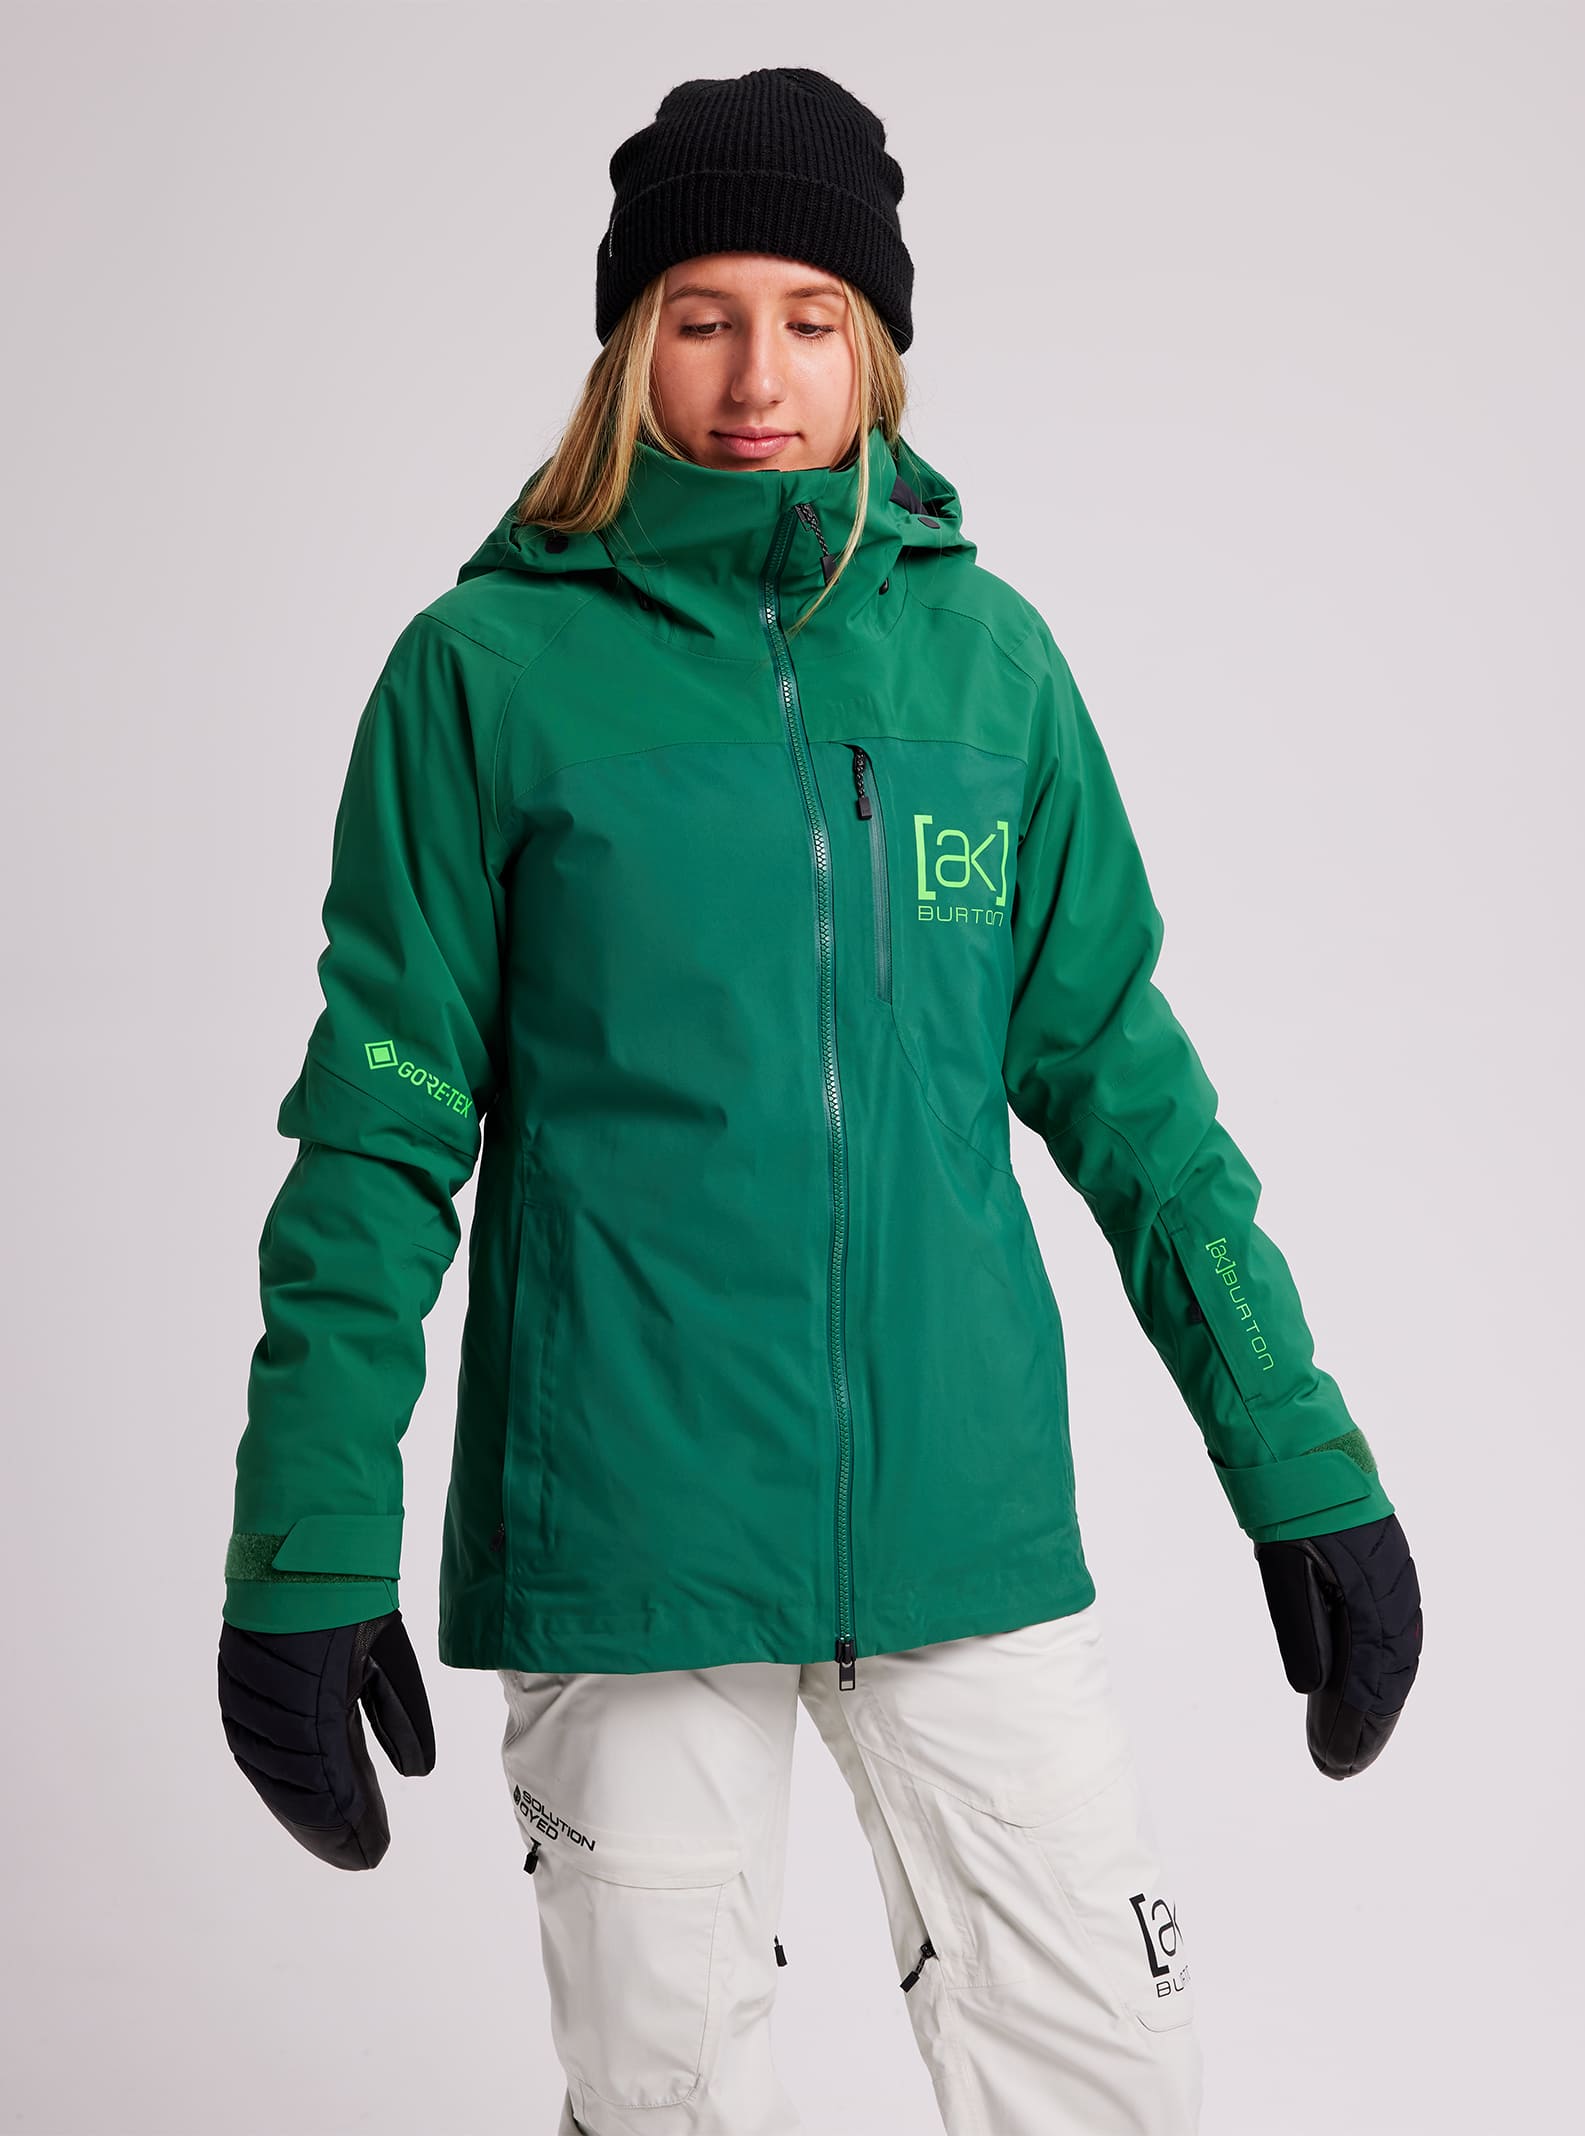 Women's Snow Jackets | Burton Snowboards SE